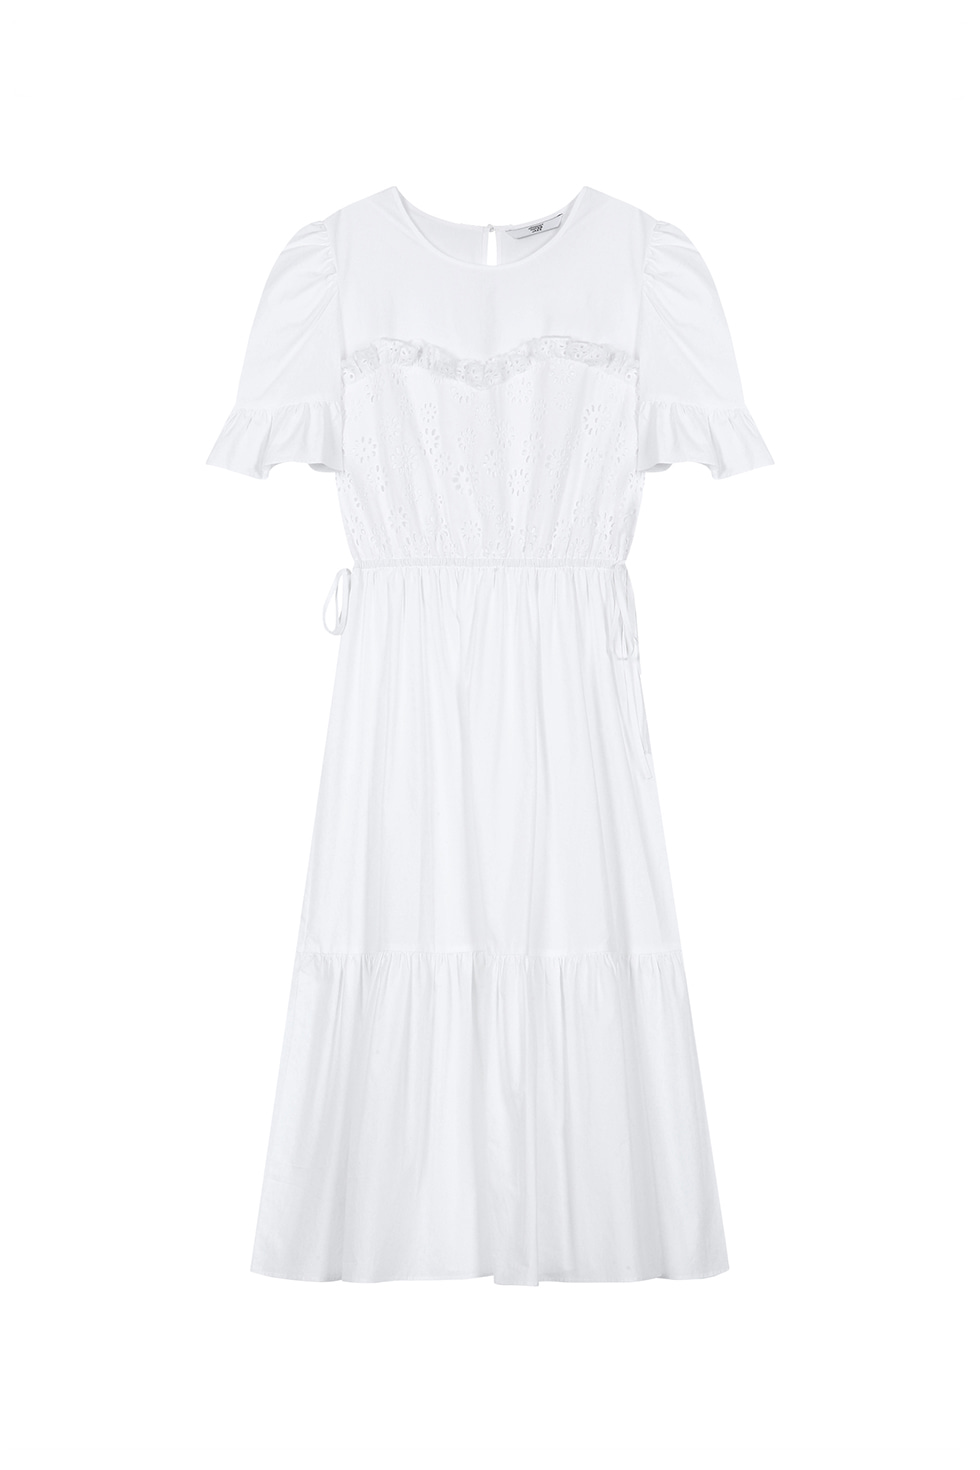 EMBROIDERY LAYERED COTTON DRESS - WHITE